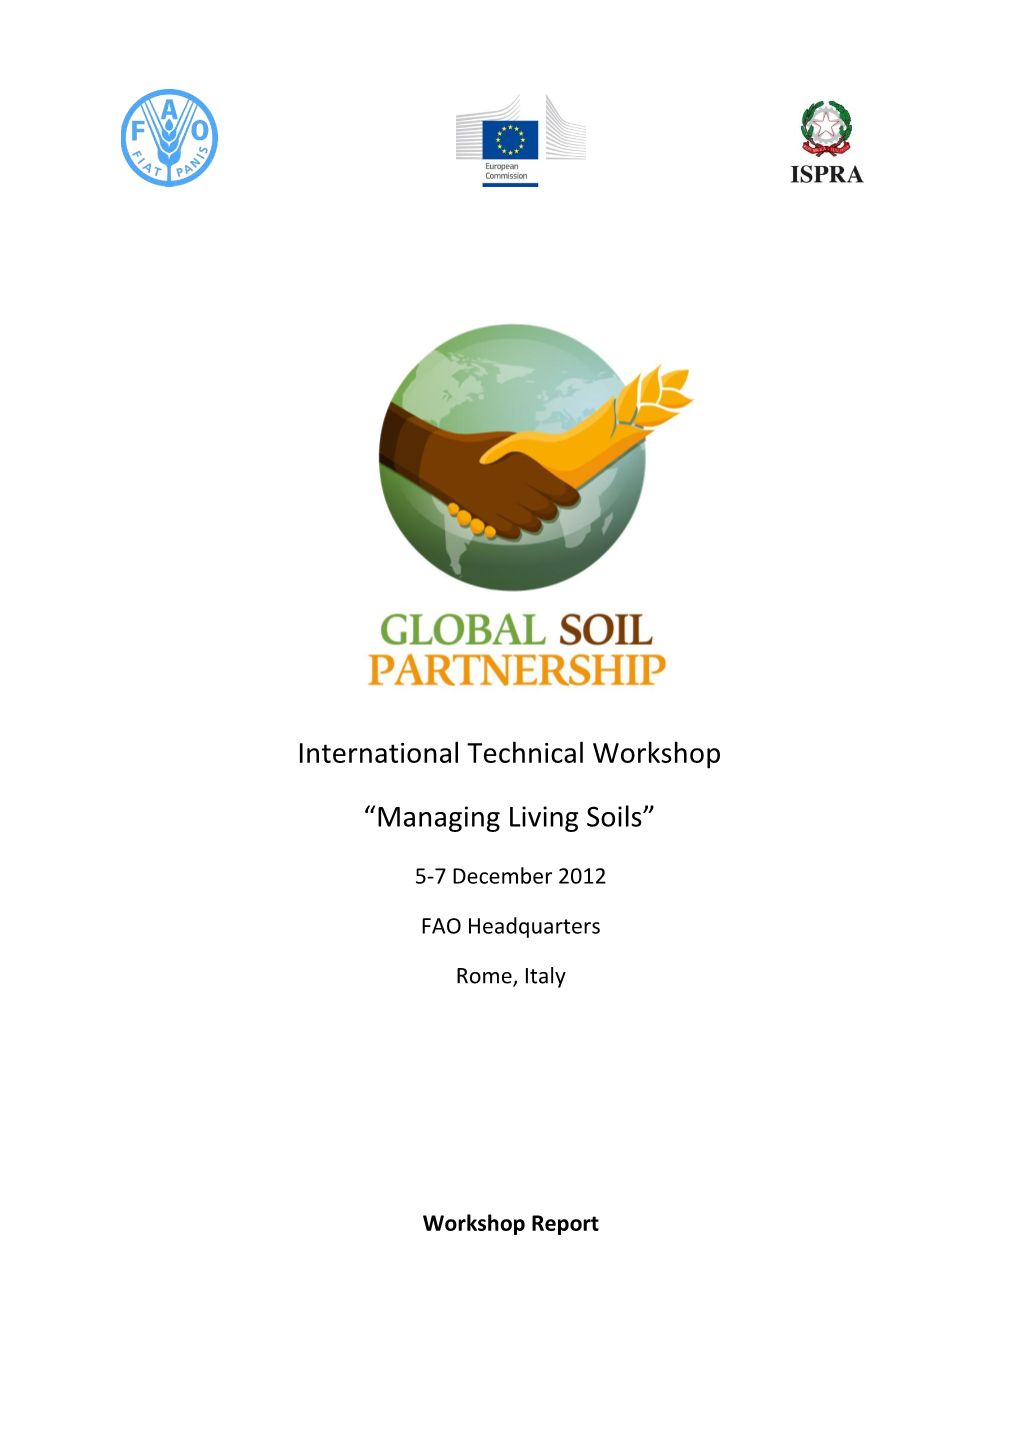 International Technical Workshop “Managing Living Soils”